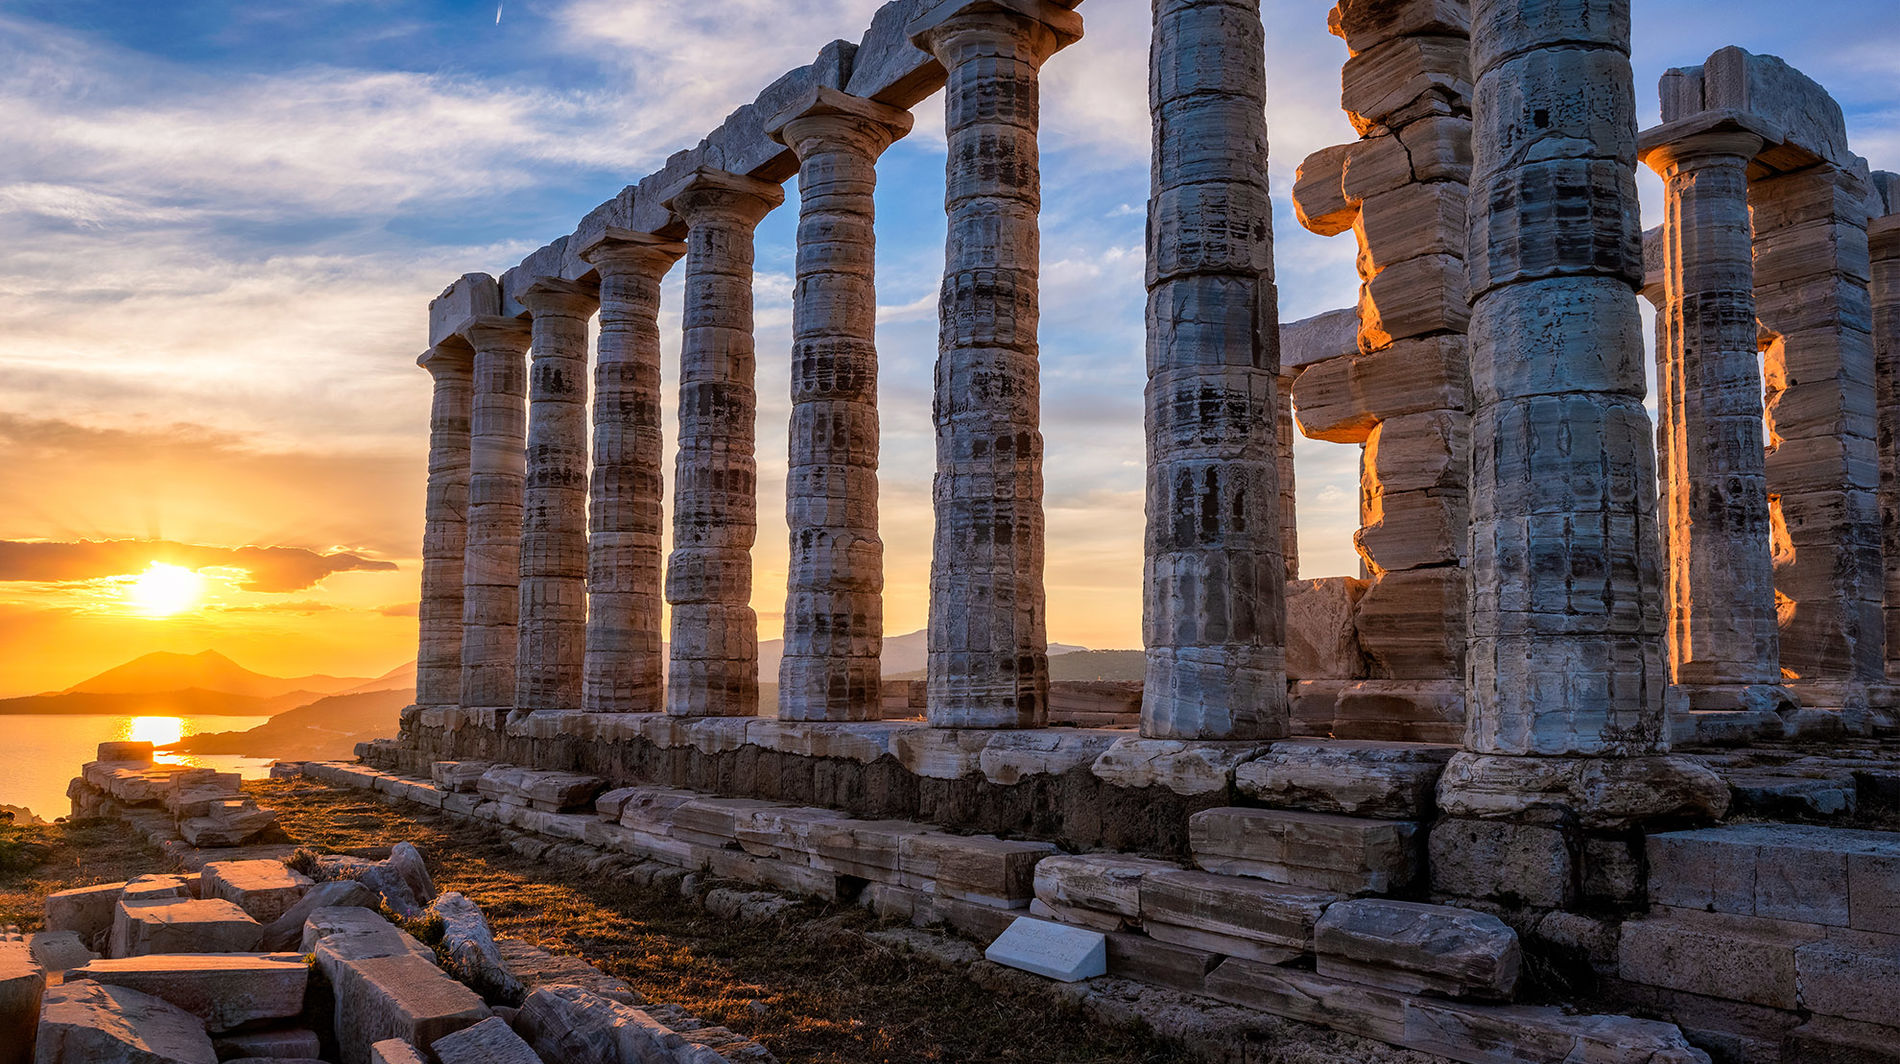 Sounio – Temple of Poseidon